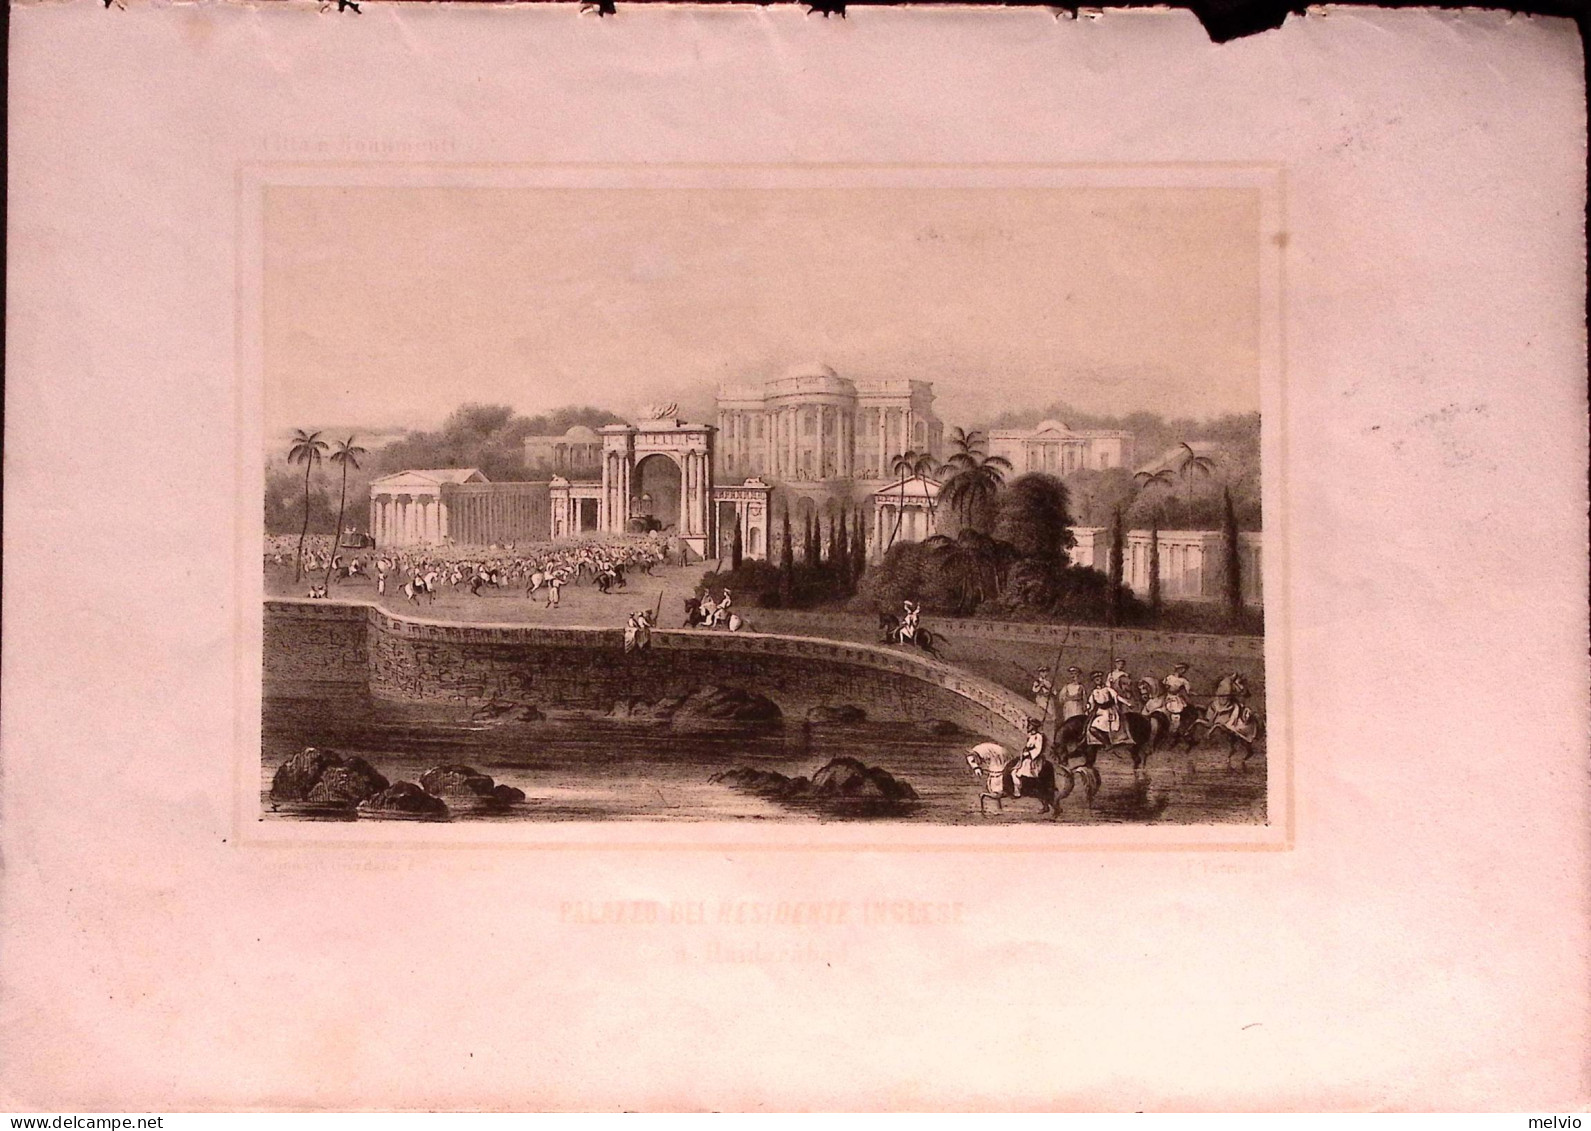 1857-Hyderabad Palazzo Del Residente Inglese Torino Lit.Giordana E Salussolia - Geographical Maps